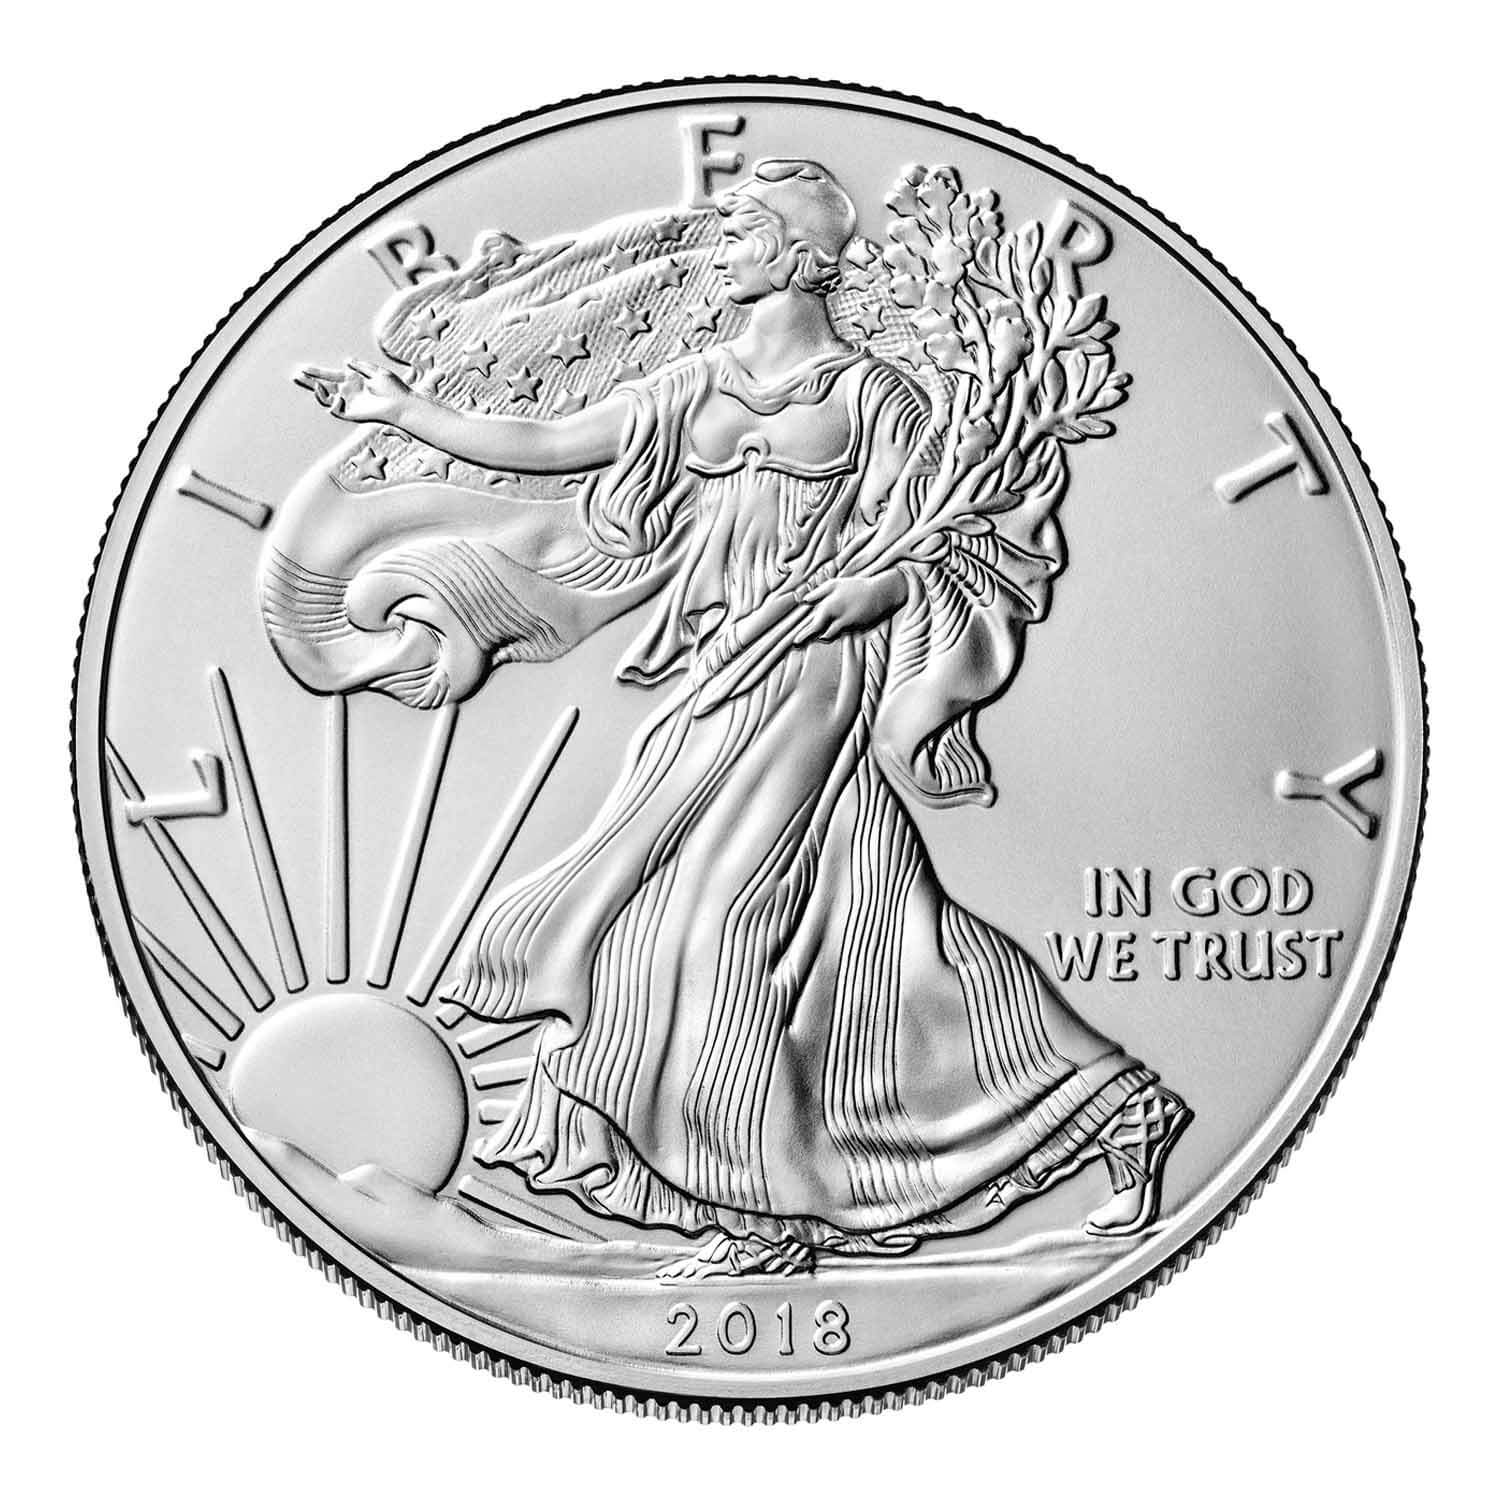 American Silver Eagle Coins for Sale, 1 oz Silver Coin